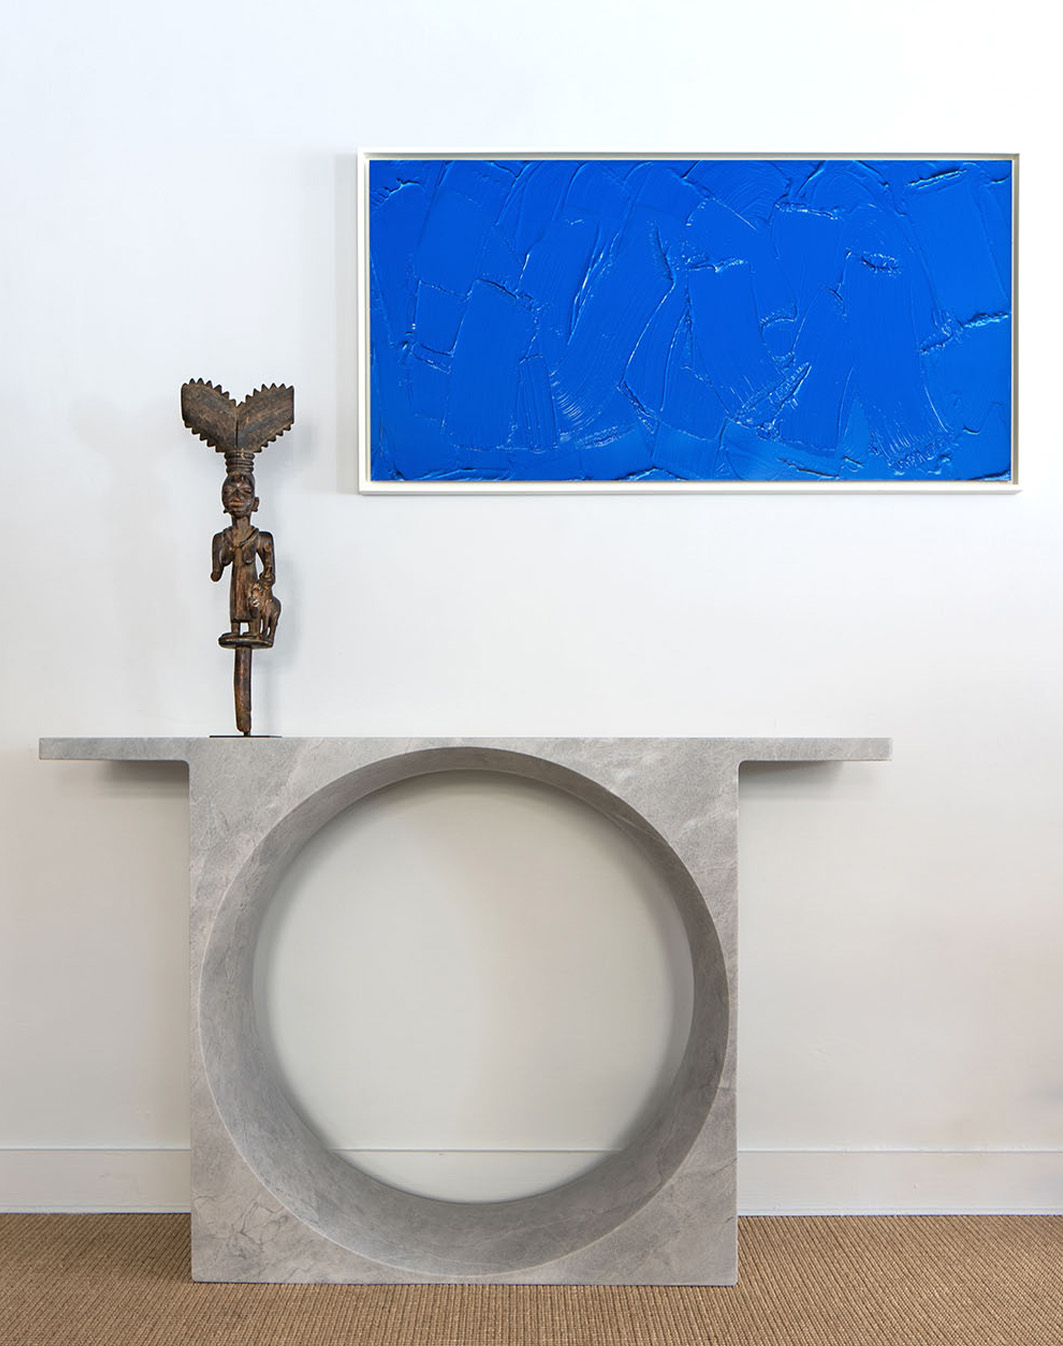 Jaime Hayon - Lucas Ratton x kamel mennour x Galerie kreo in Saint-Tropez